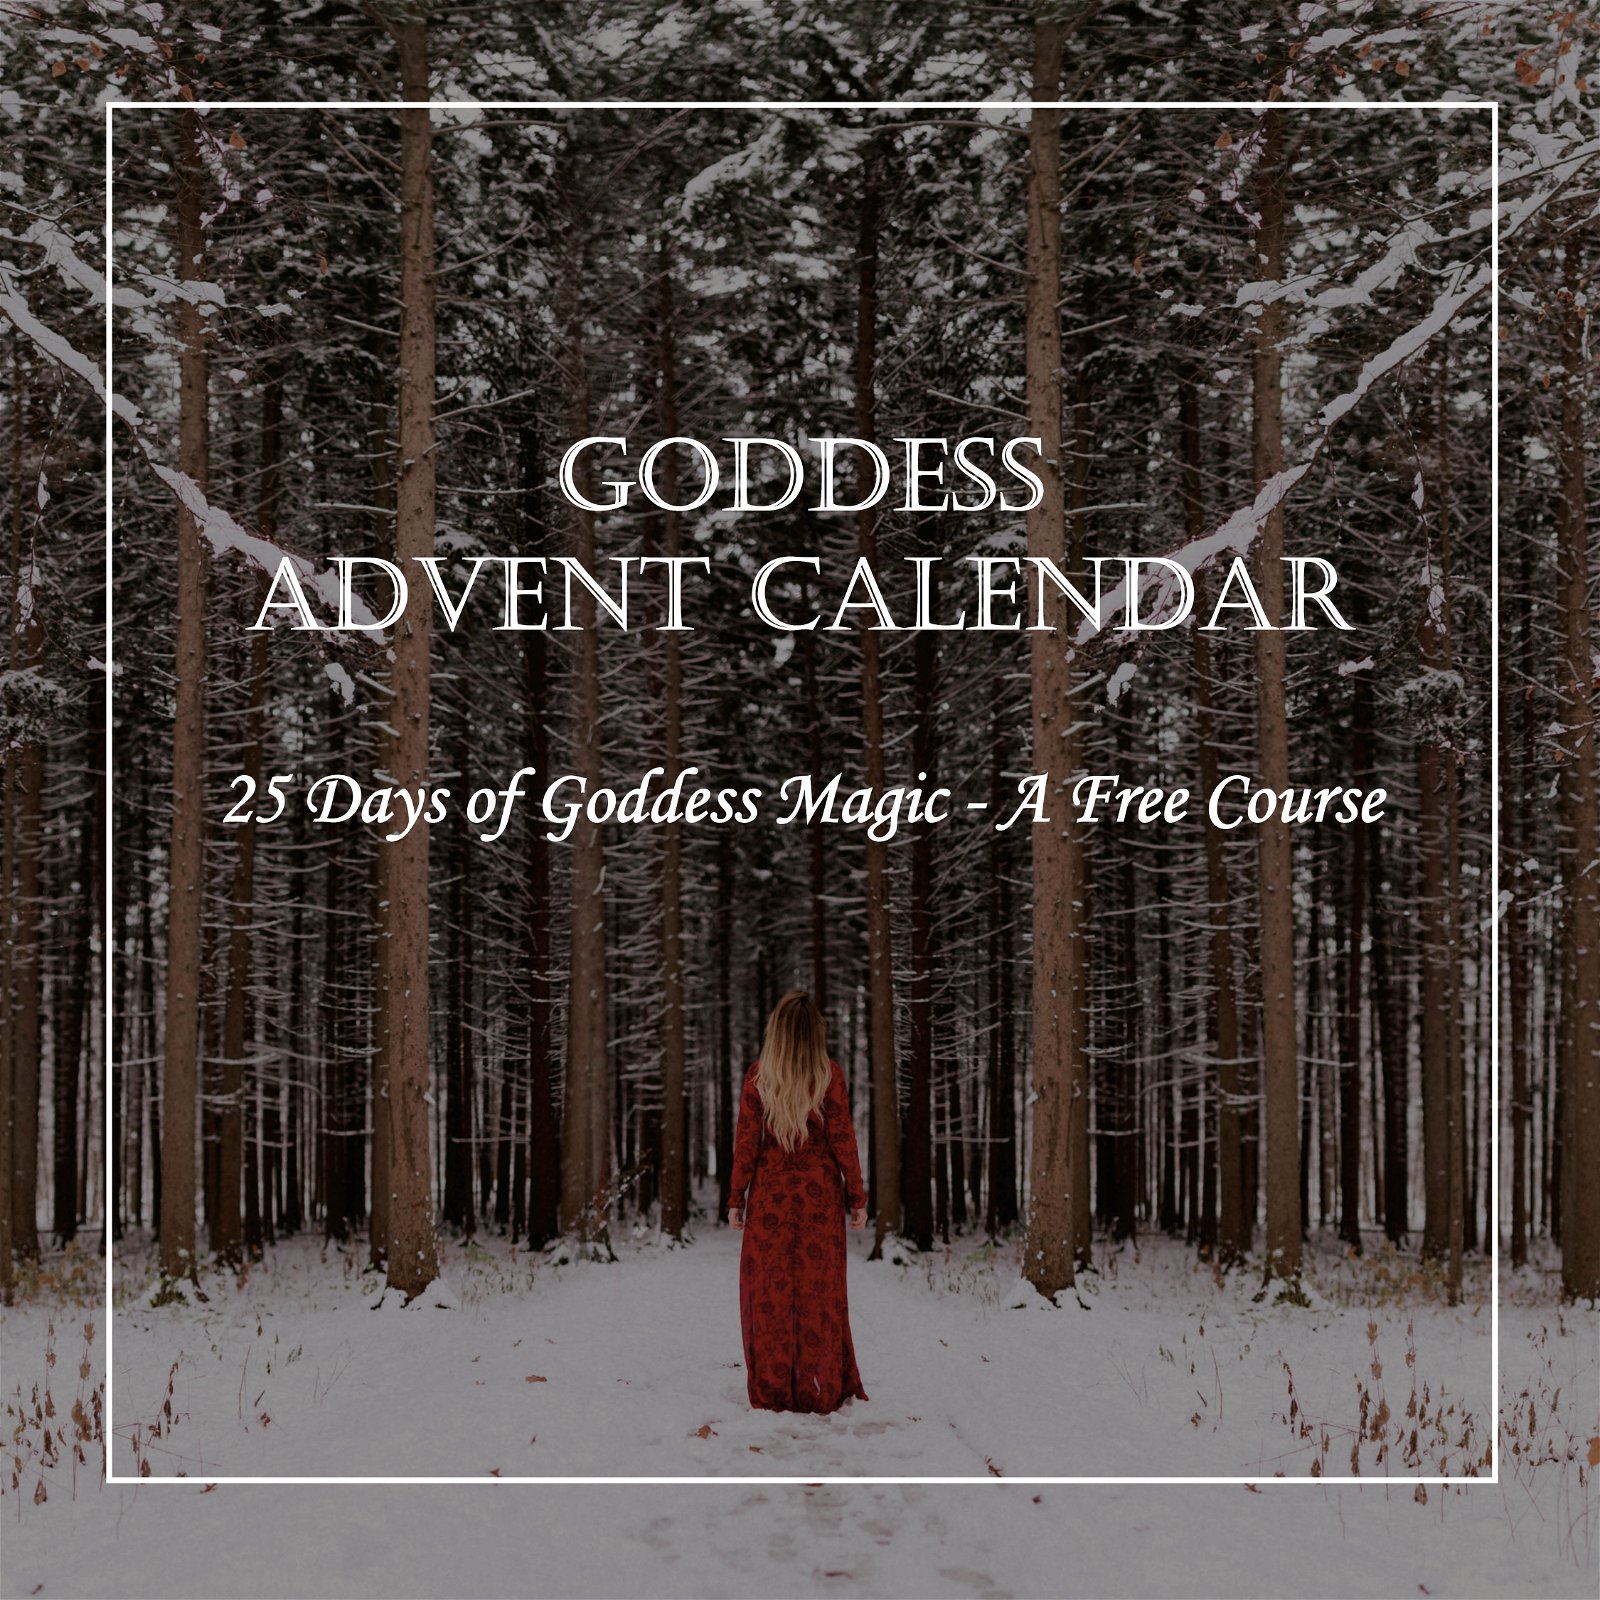 Goddess Advent Calendar  - 25 Days of Goddess - Free Course